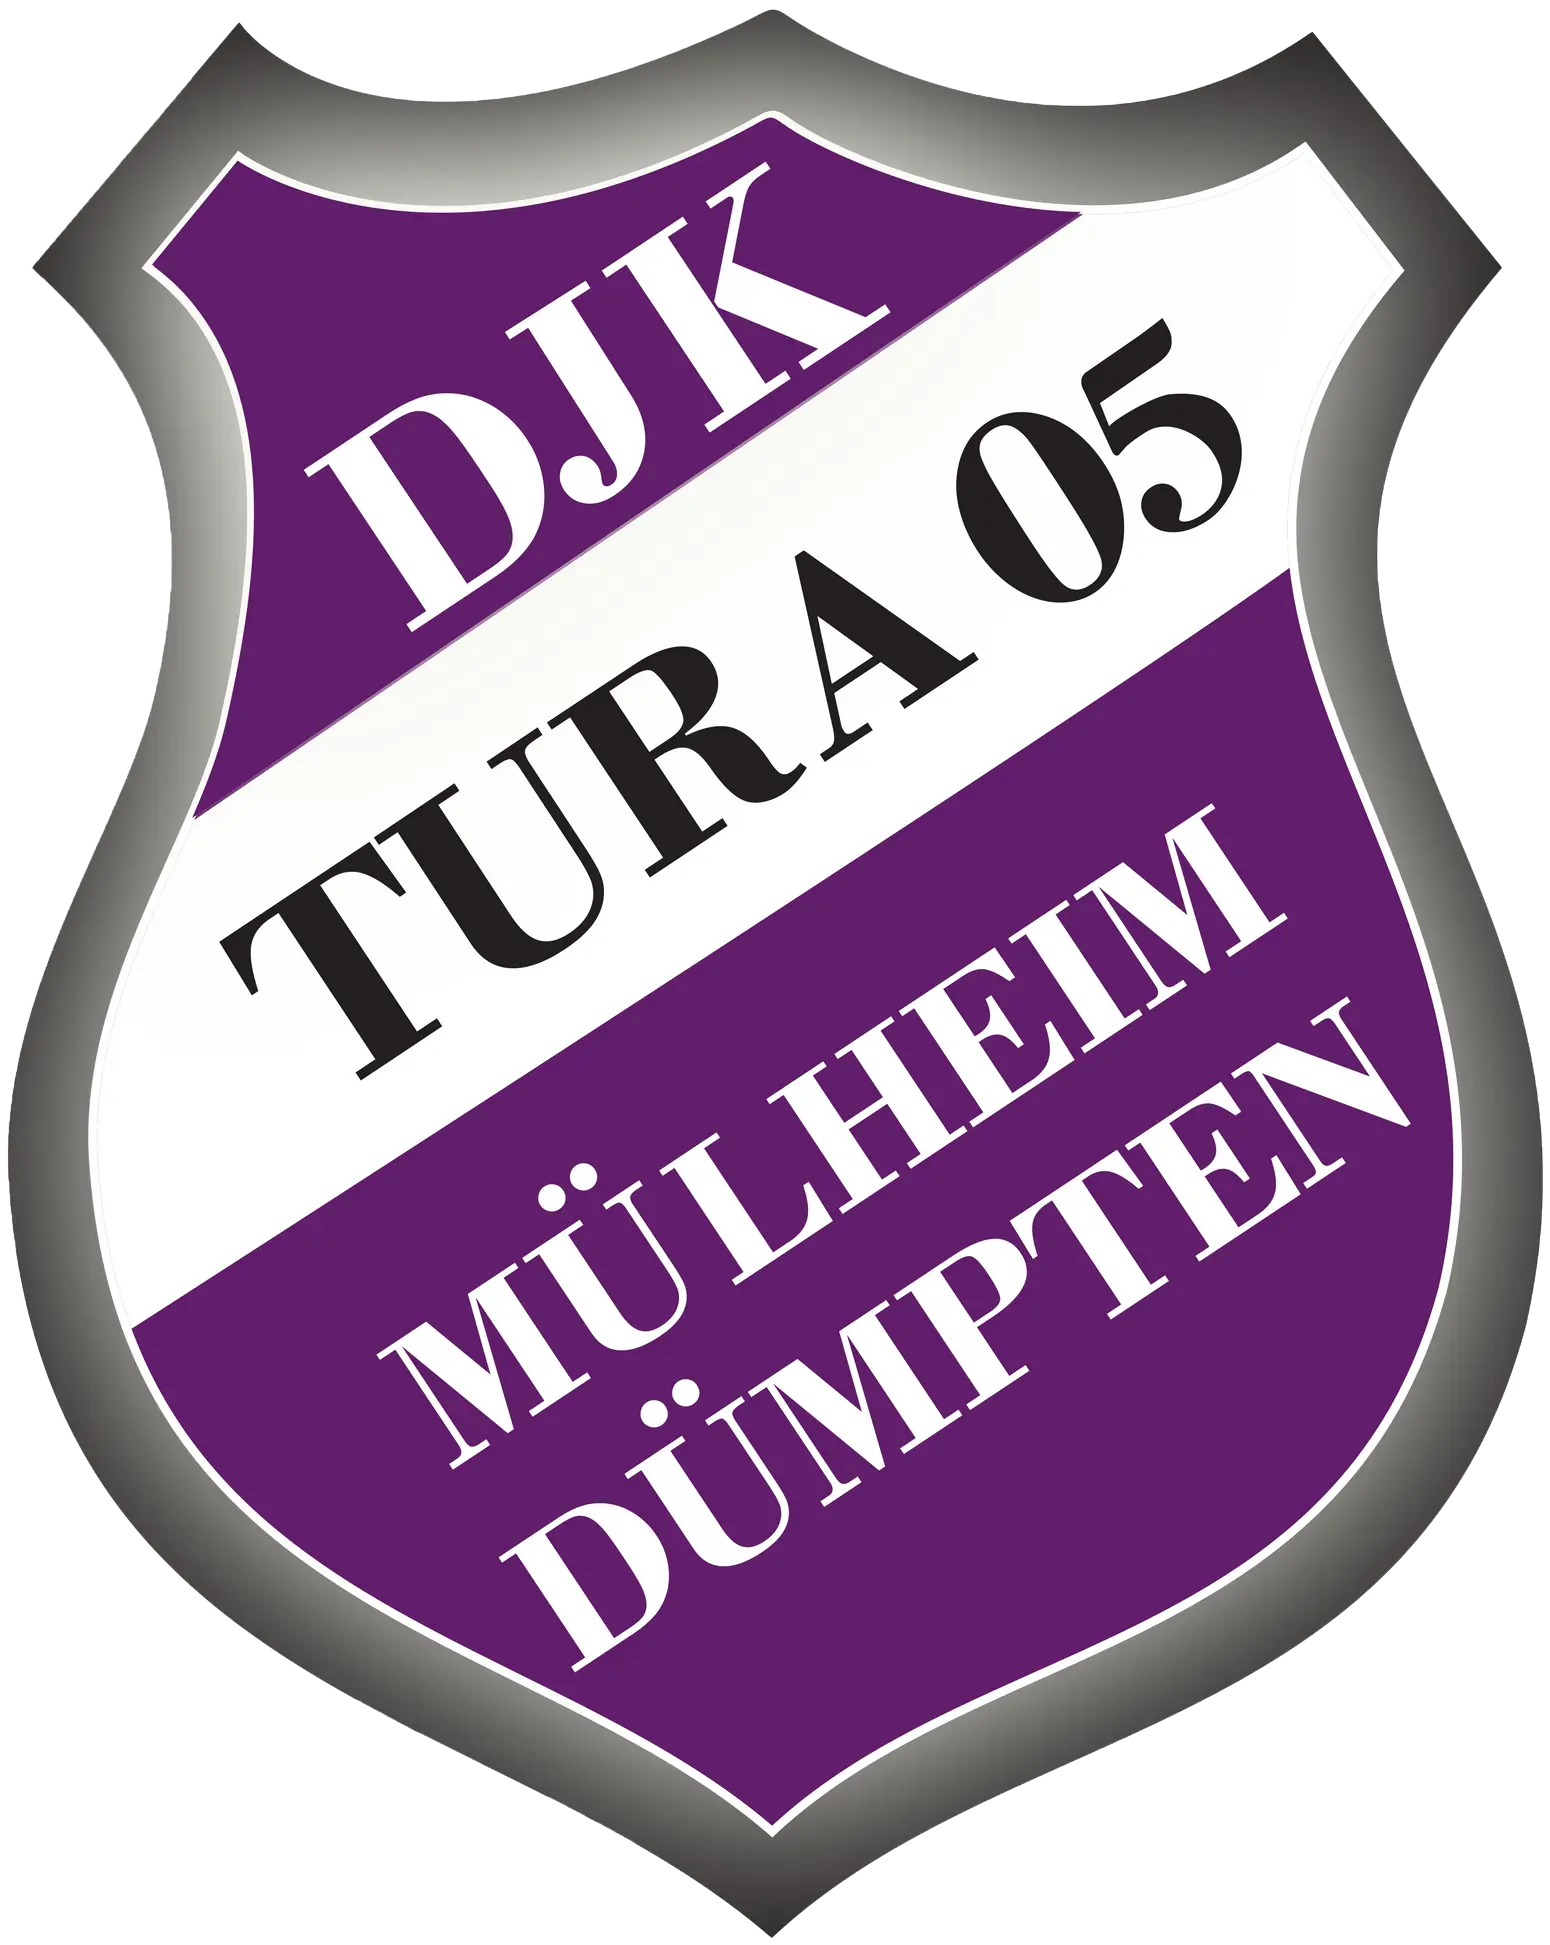 DJK Tura05 Dümpten e.V.